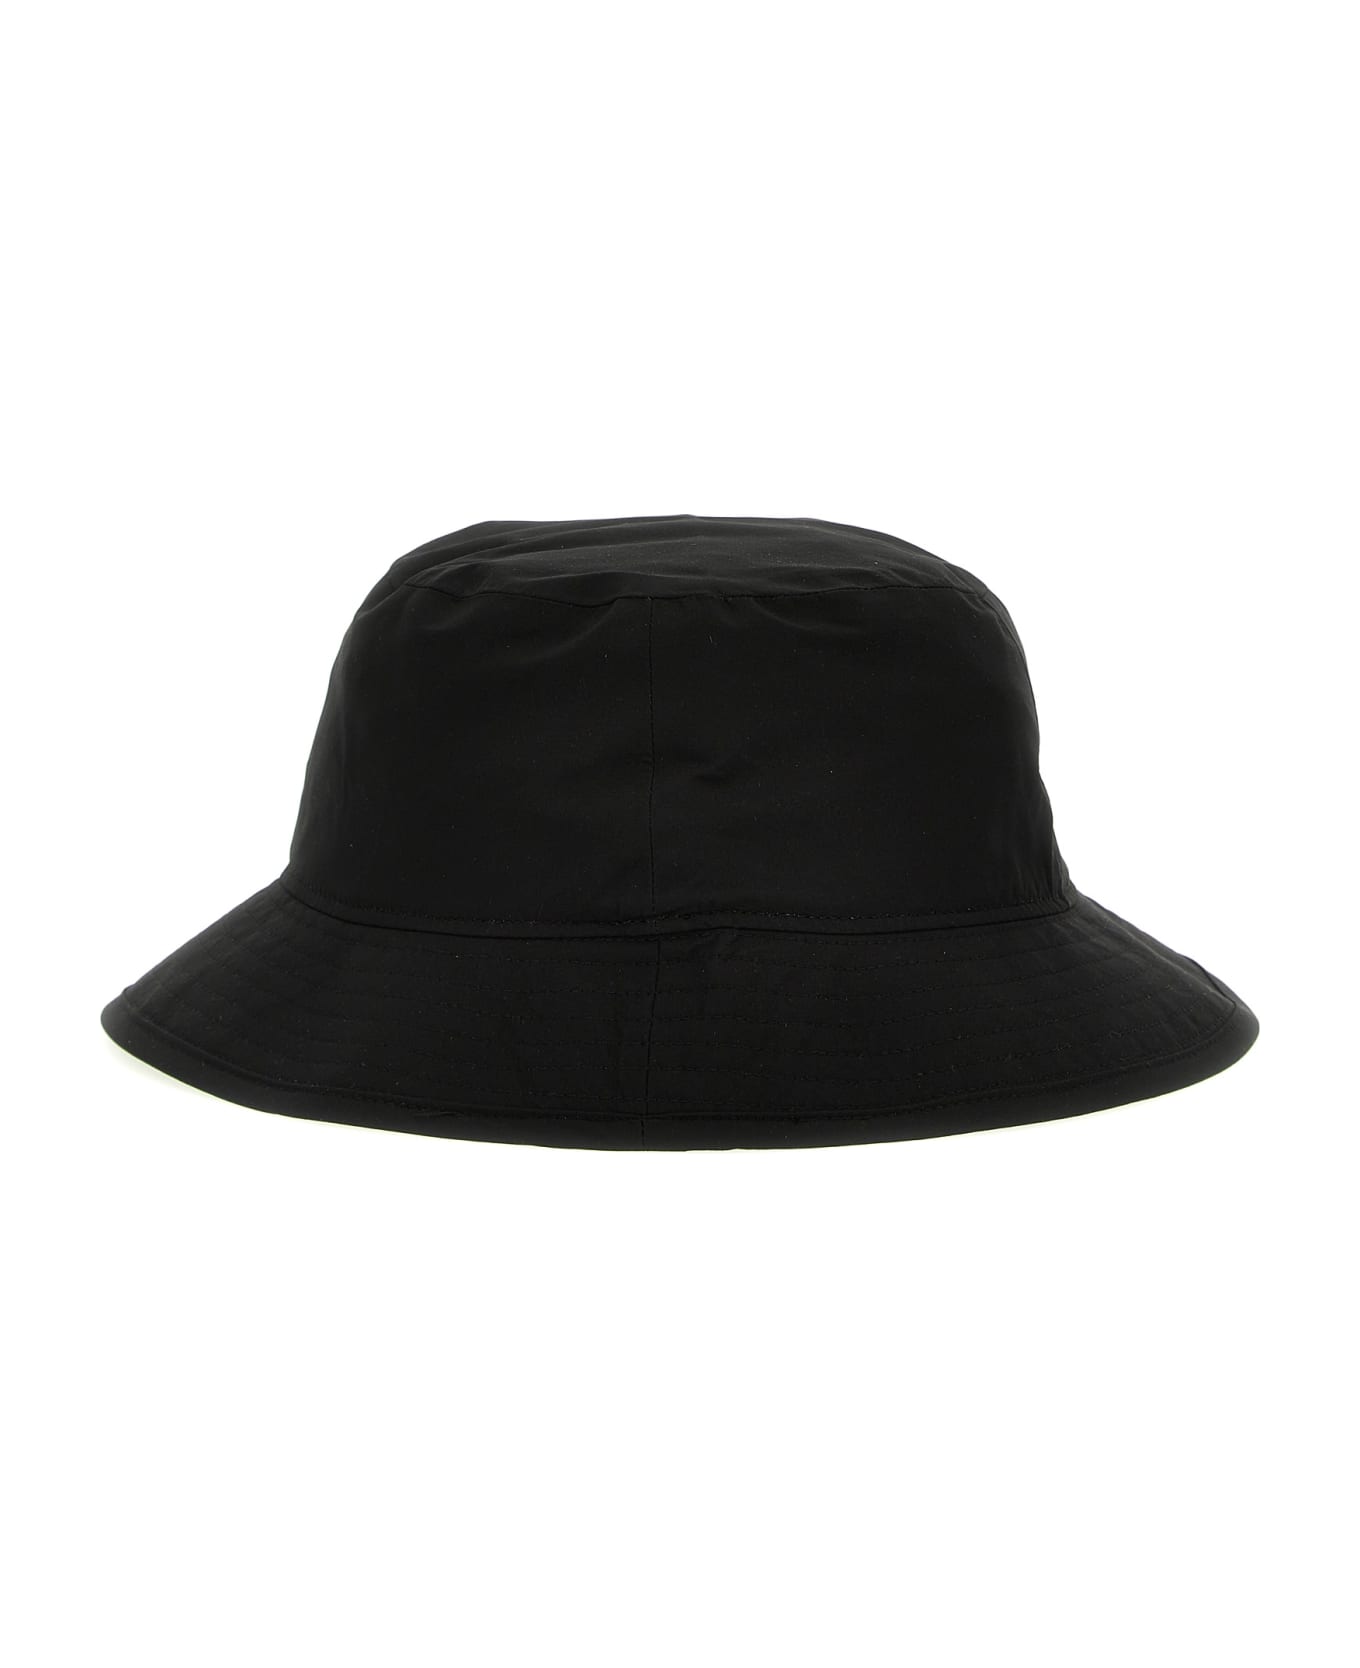 C.P. Company 'metropolis Series' Bucket Hat